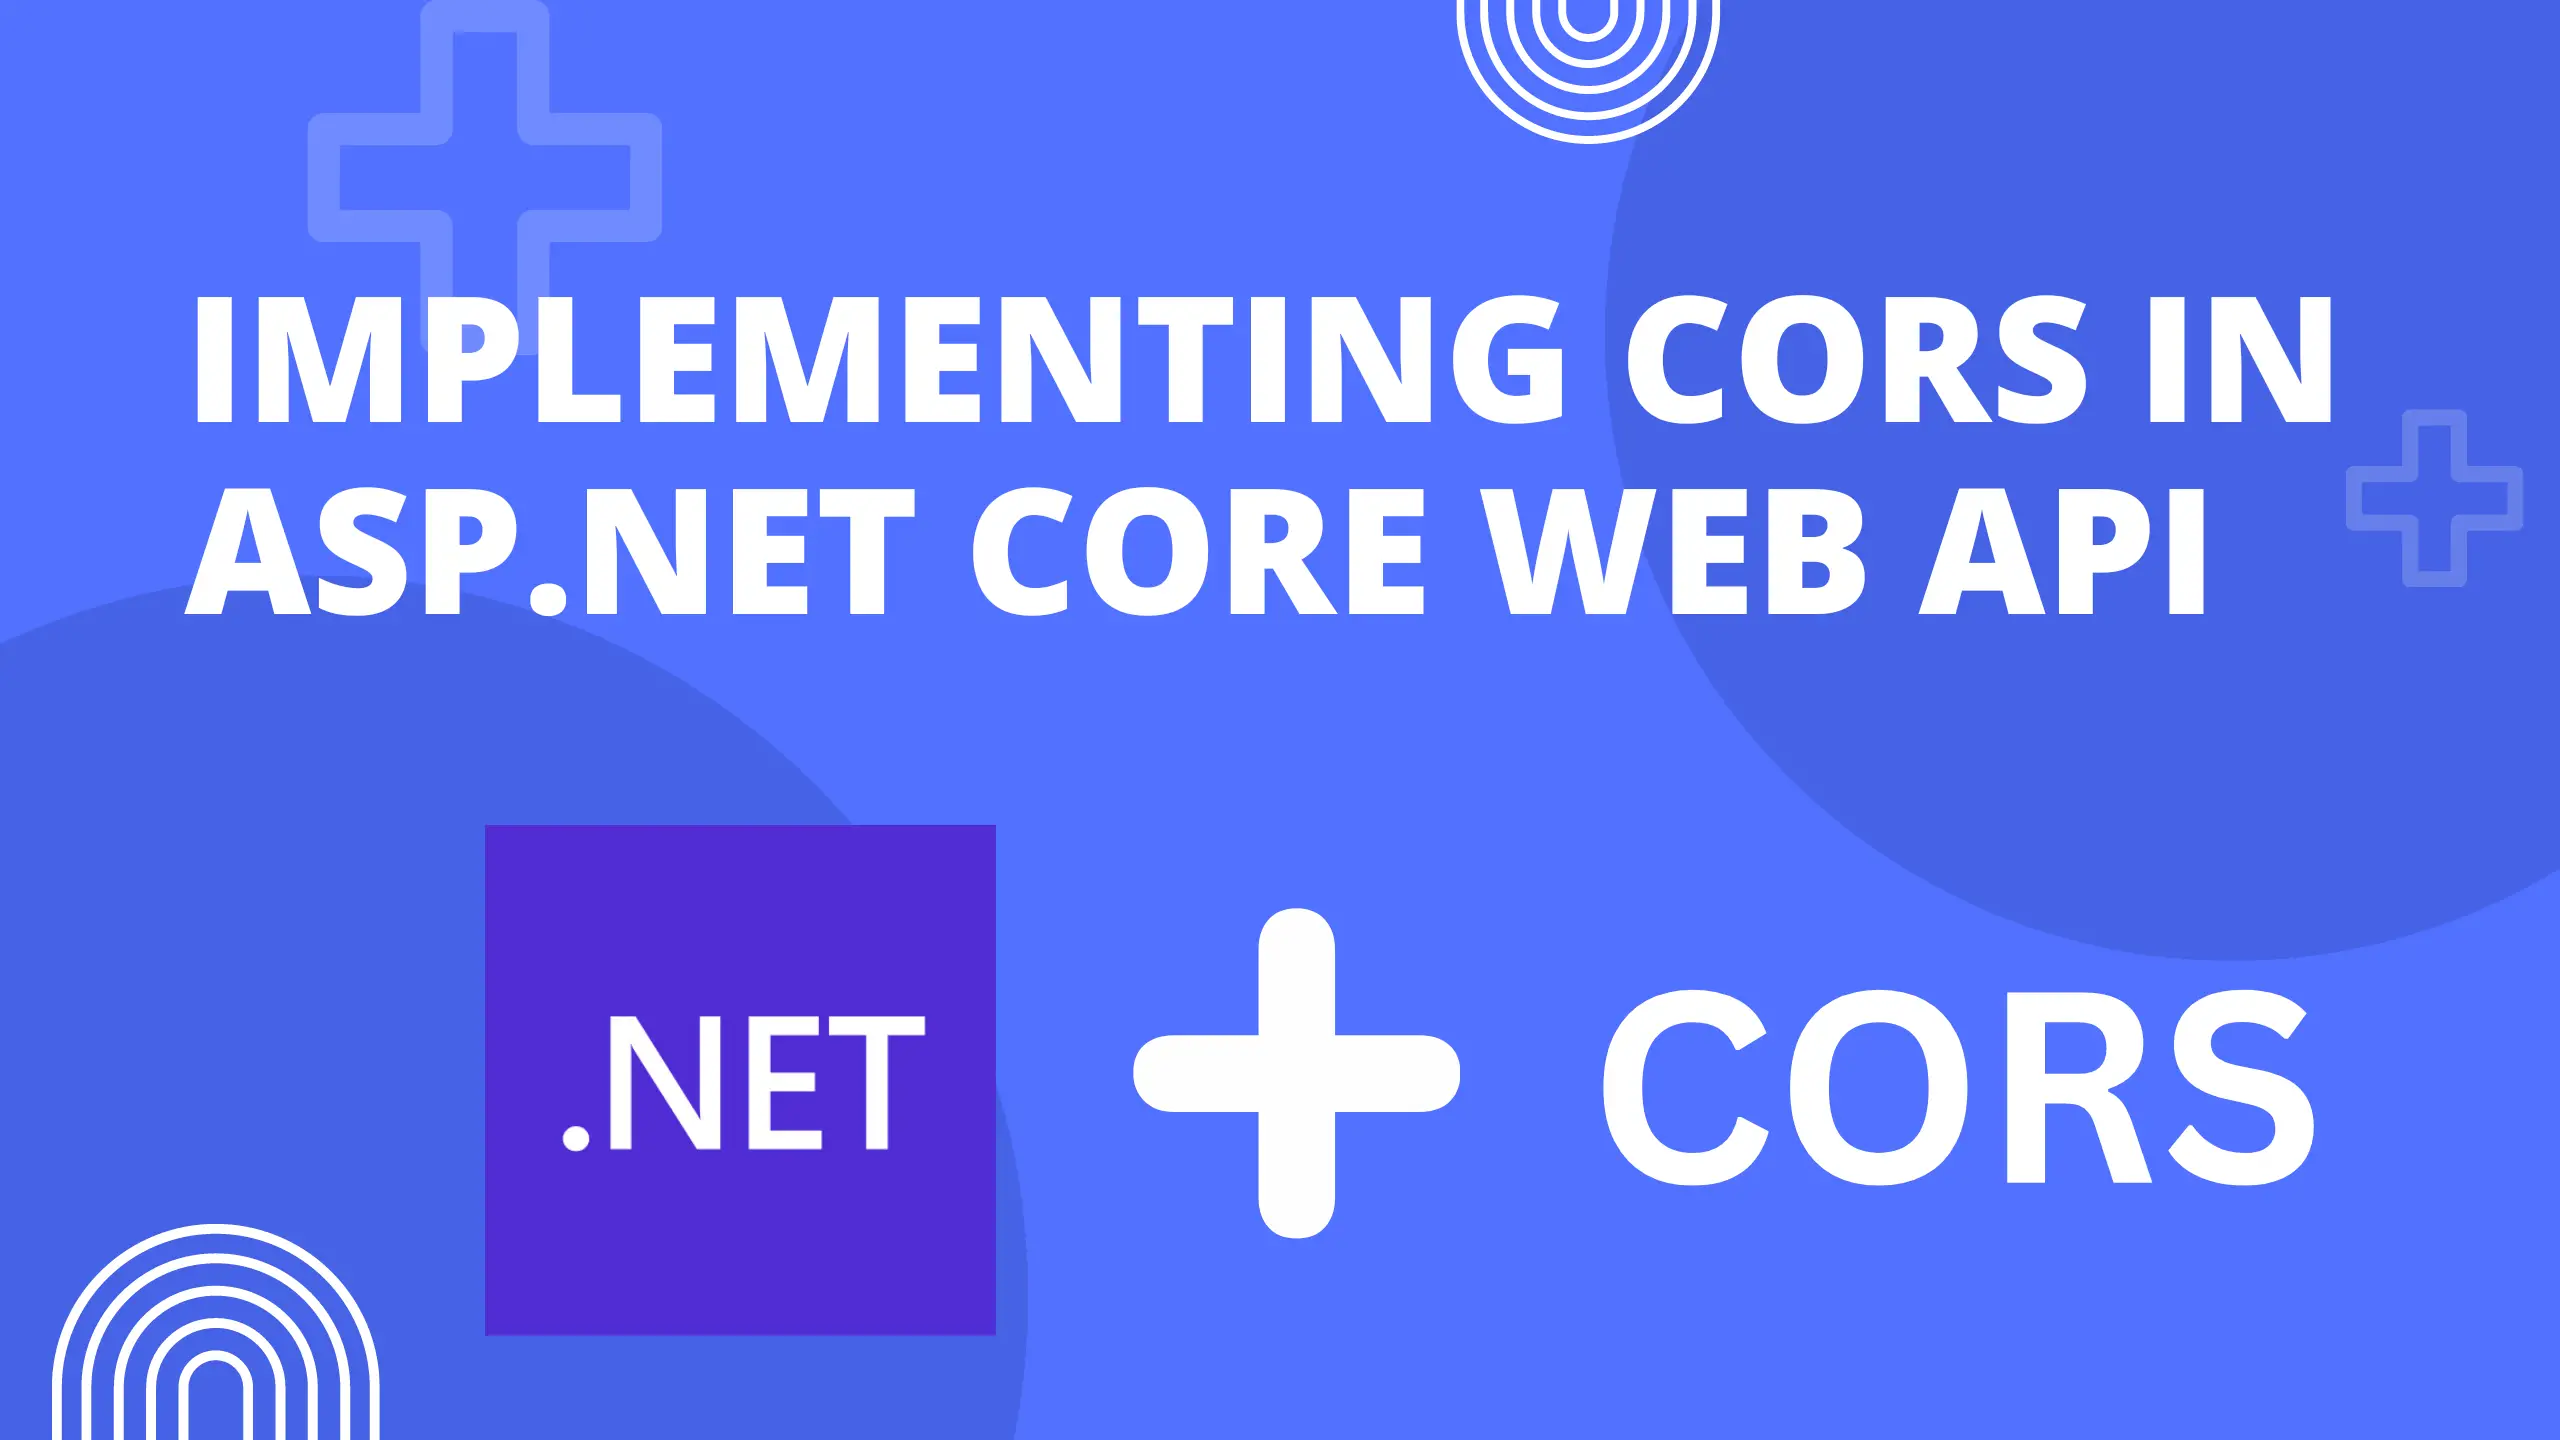 Implementing CORS in ASP.NET Core Web API: Enabling Secure Cross-Origin Resource Sharing